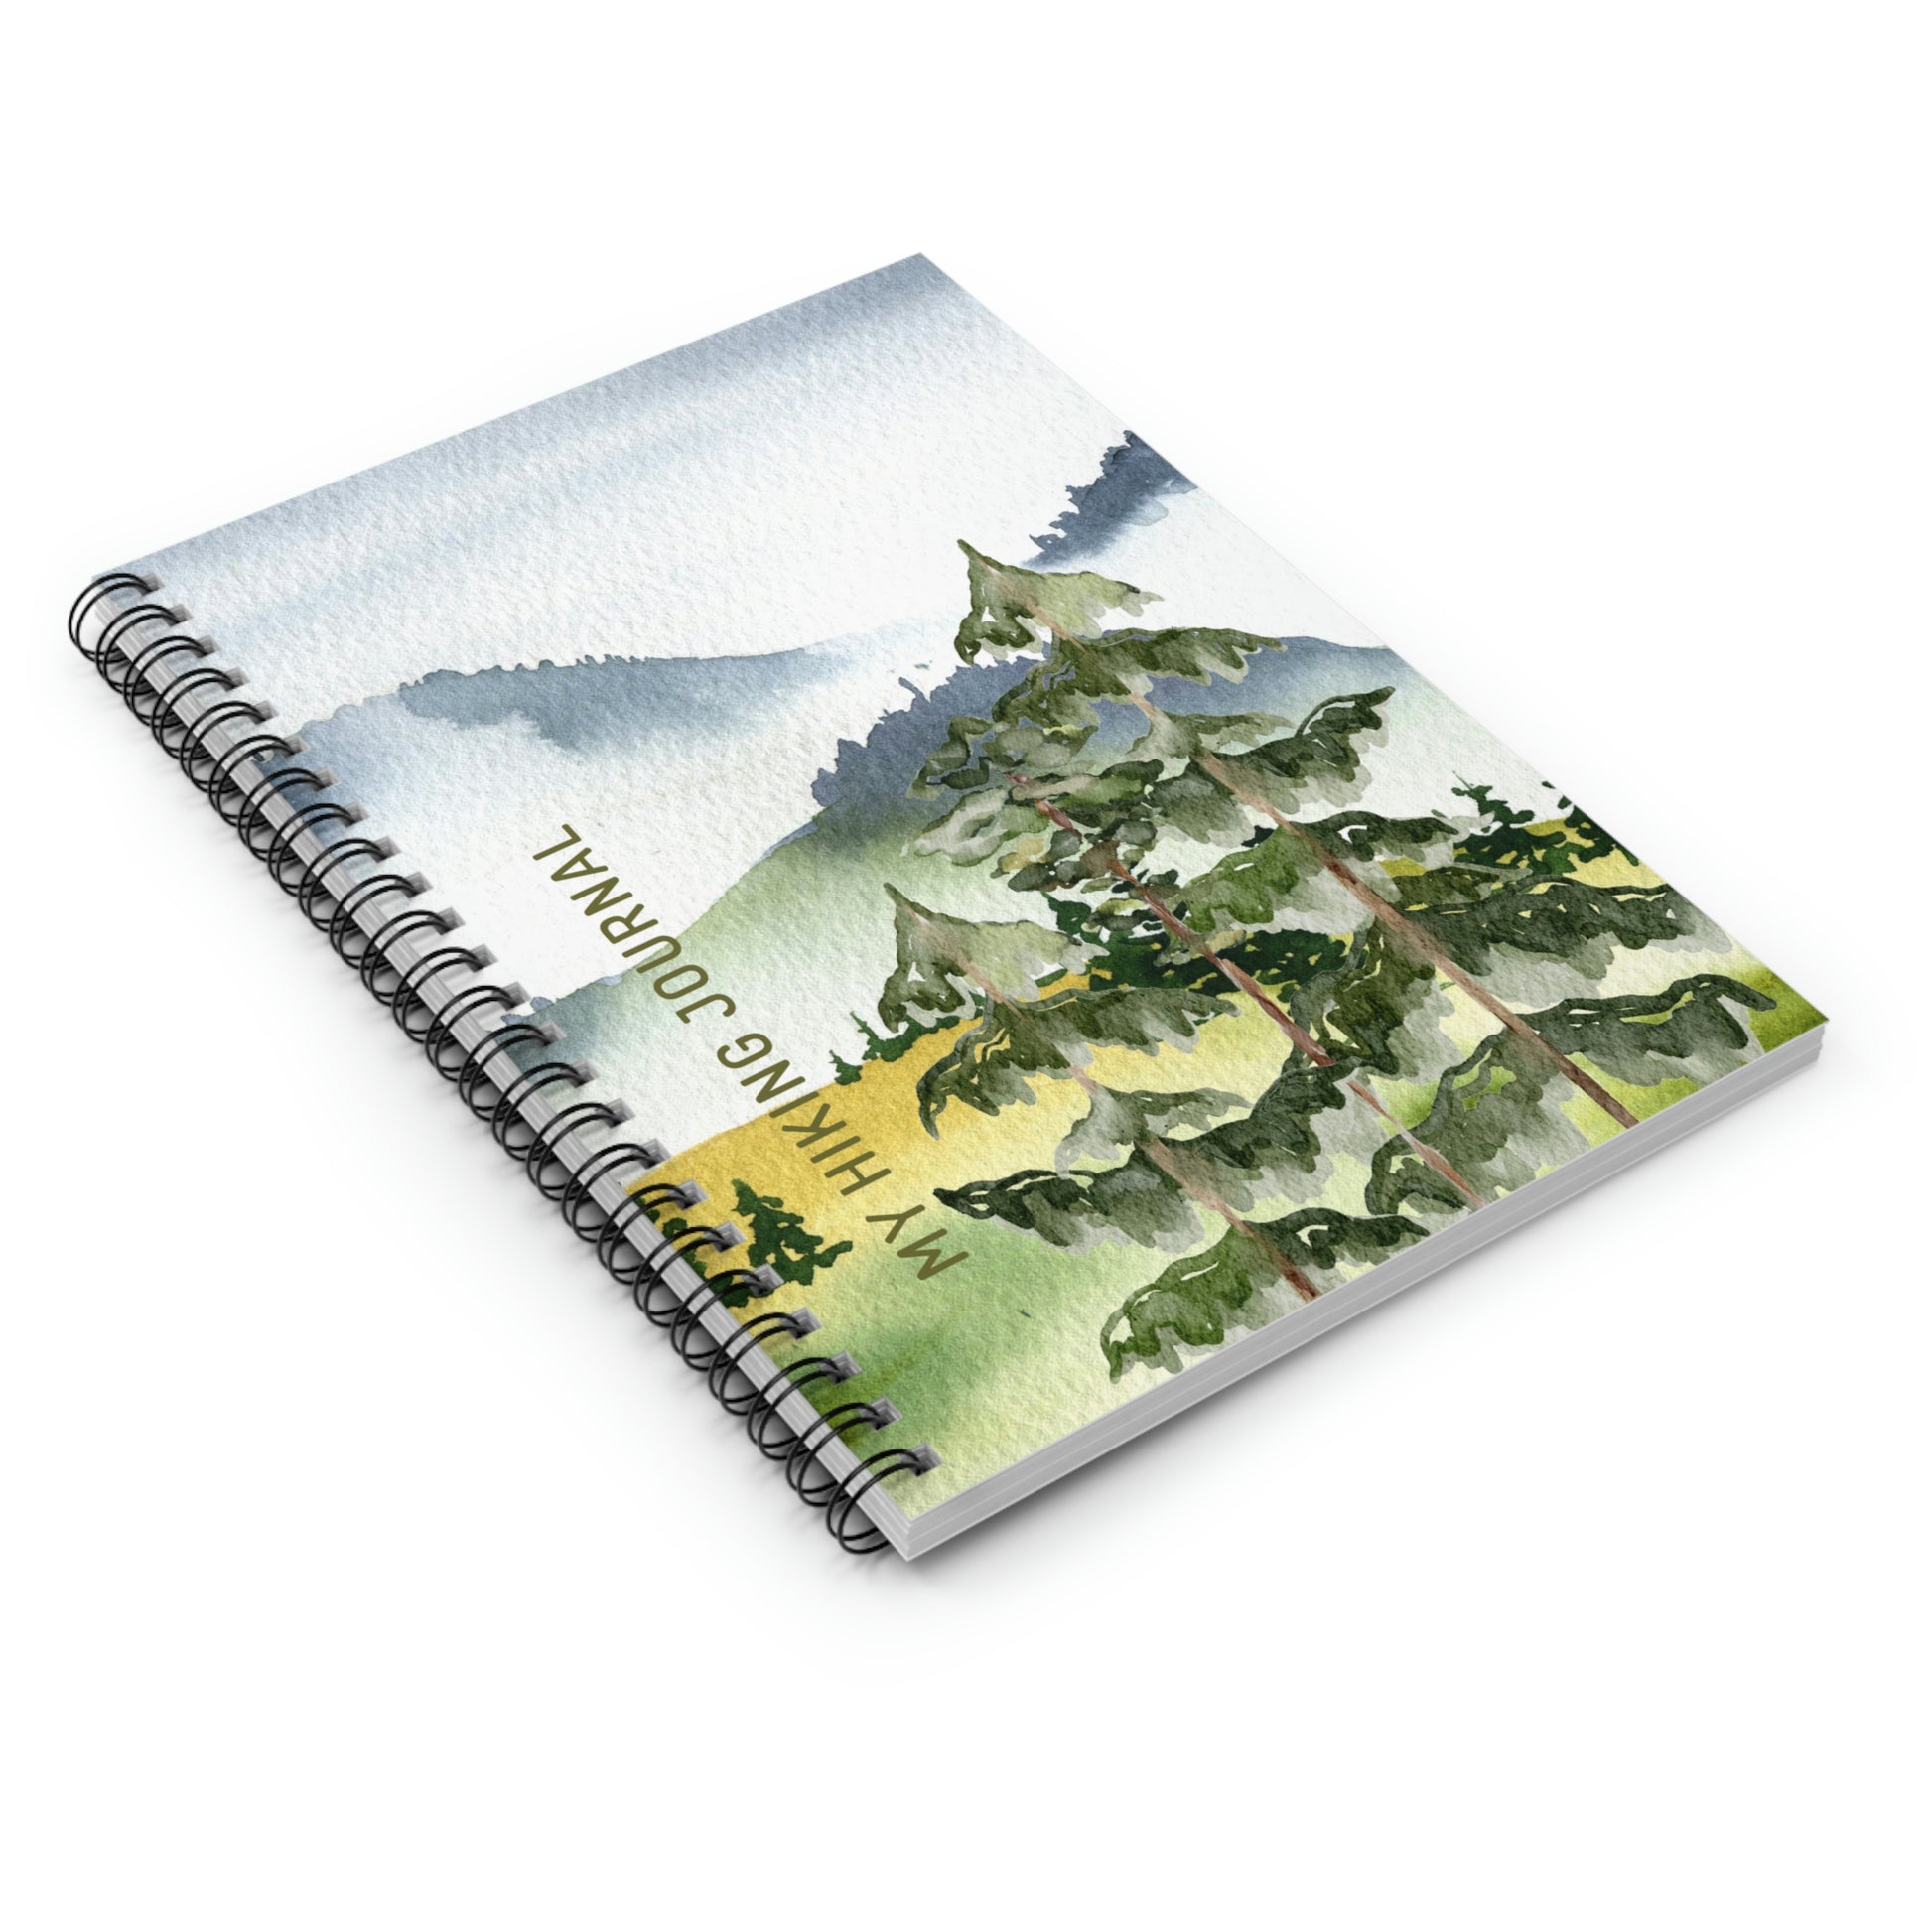 Spiral notebook, spiral notebook for hiking log, hiking log notebook, notebook for hikers, my hiking journal, hiking log, gifts for hikers, hiking gifts